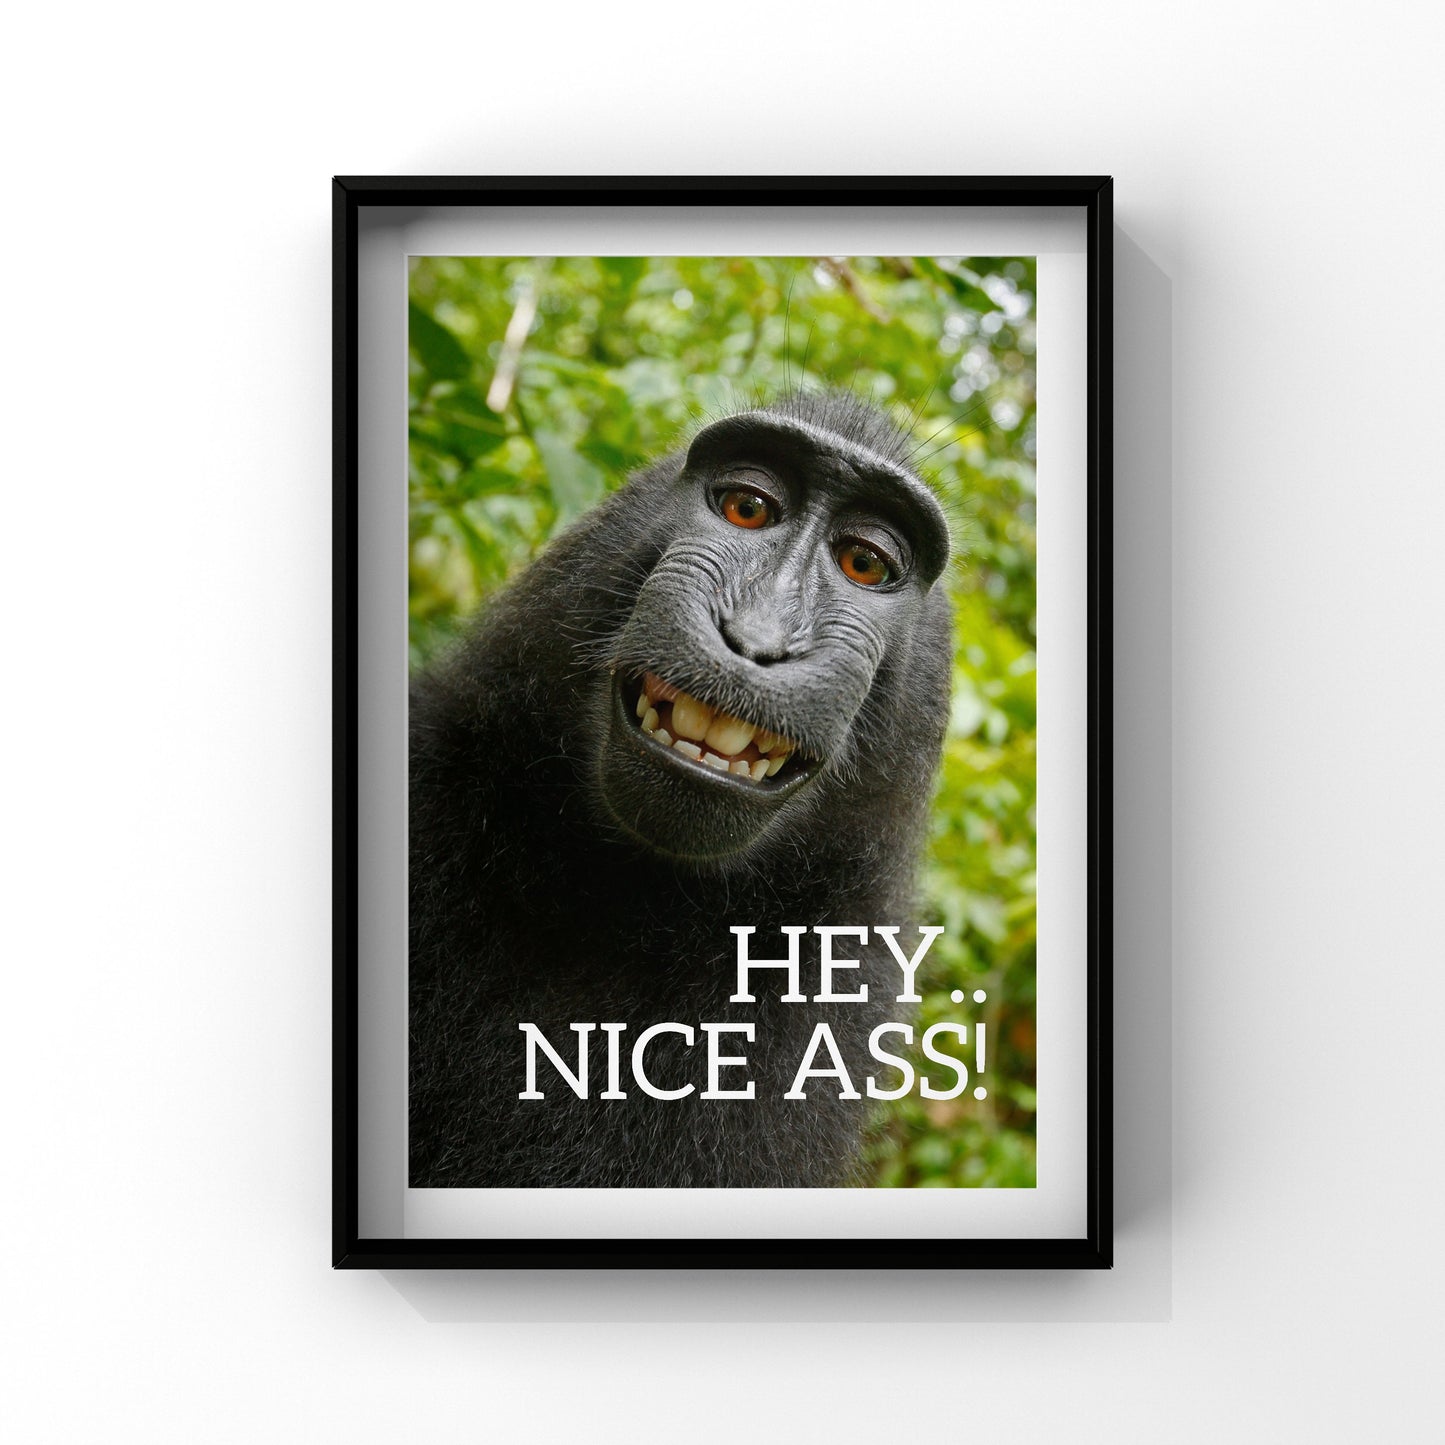 Hey nice ass